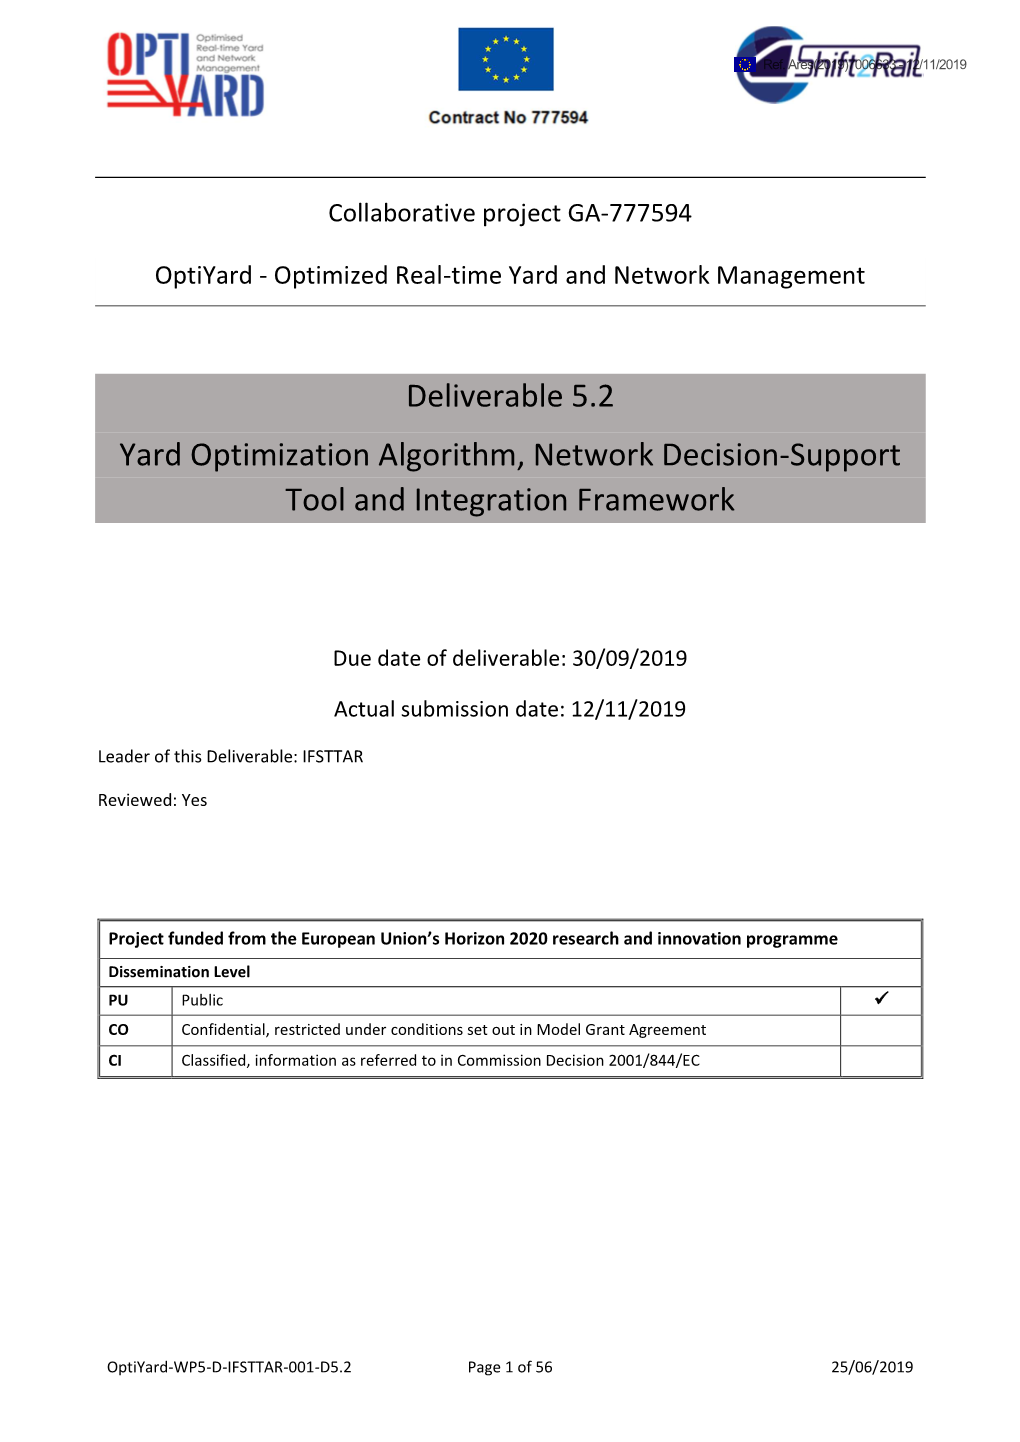 Deliverable 5.2 Yard Optimization Algorithm, Network Decision-Support Tool and Integration Framework